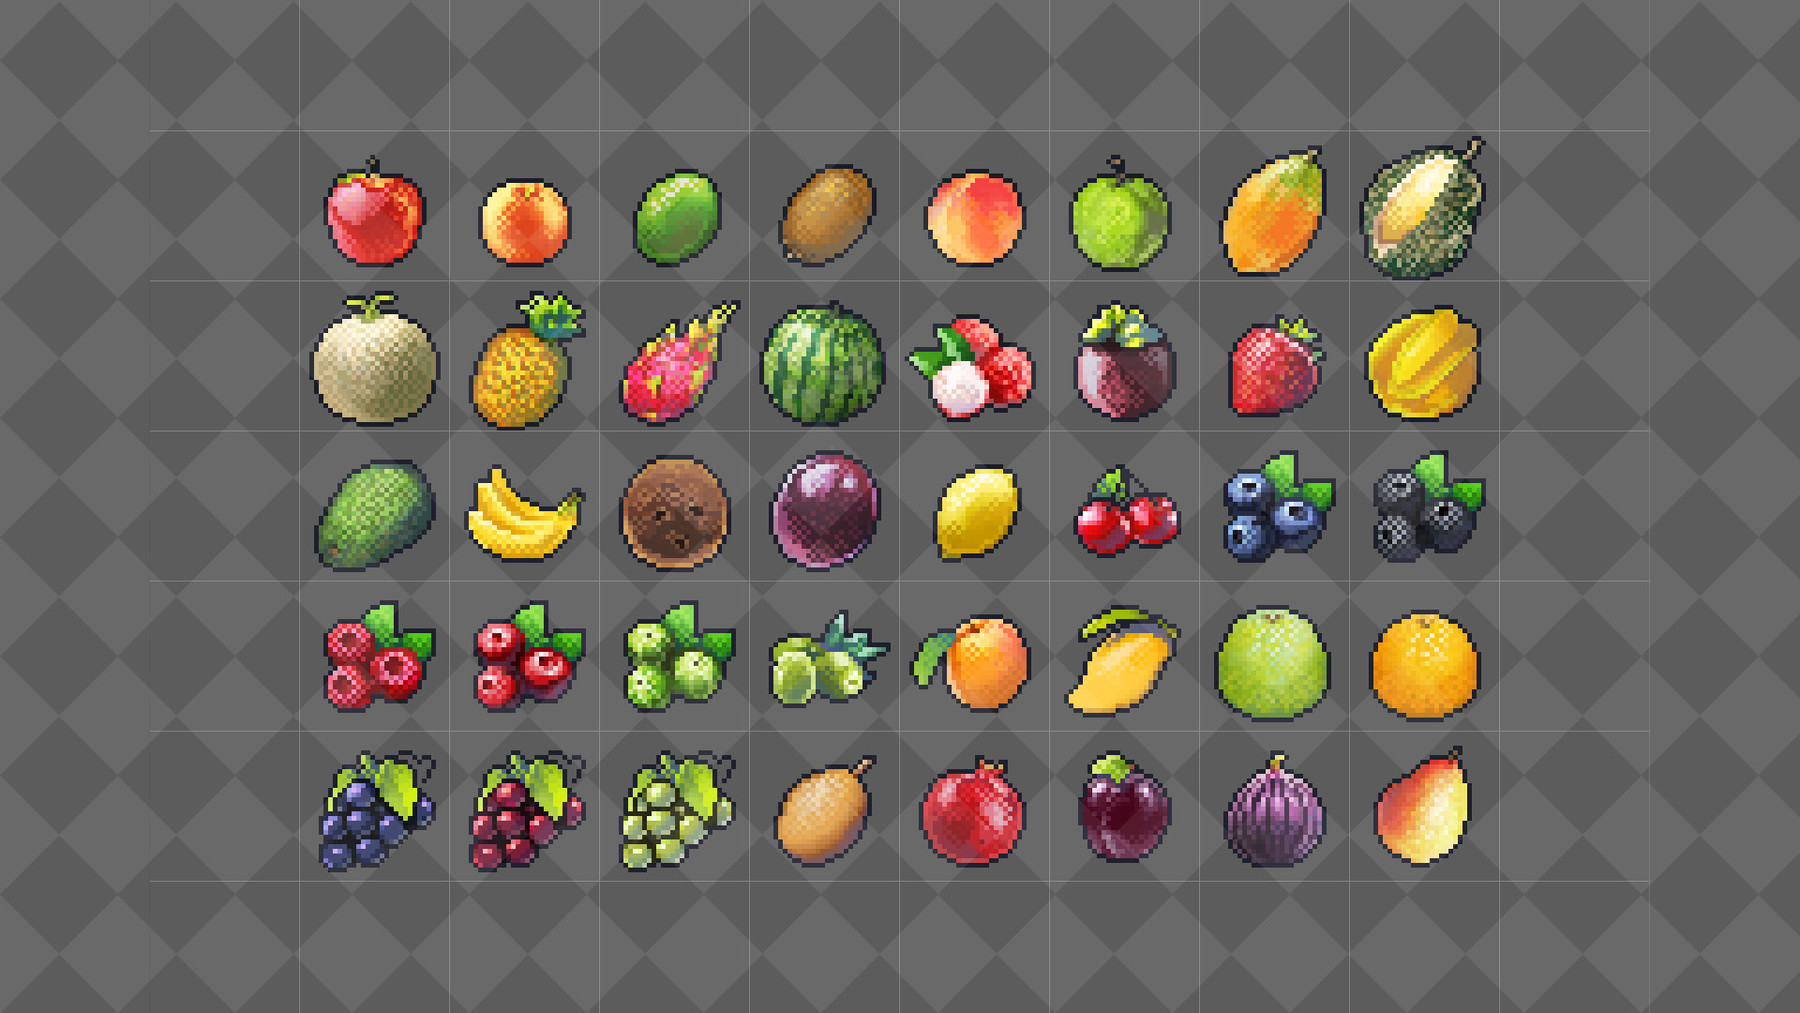 ArtStation - 2DAsset Pixel Fresh Fruits | Game Assets